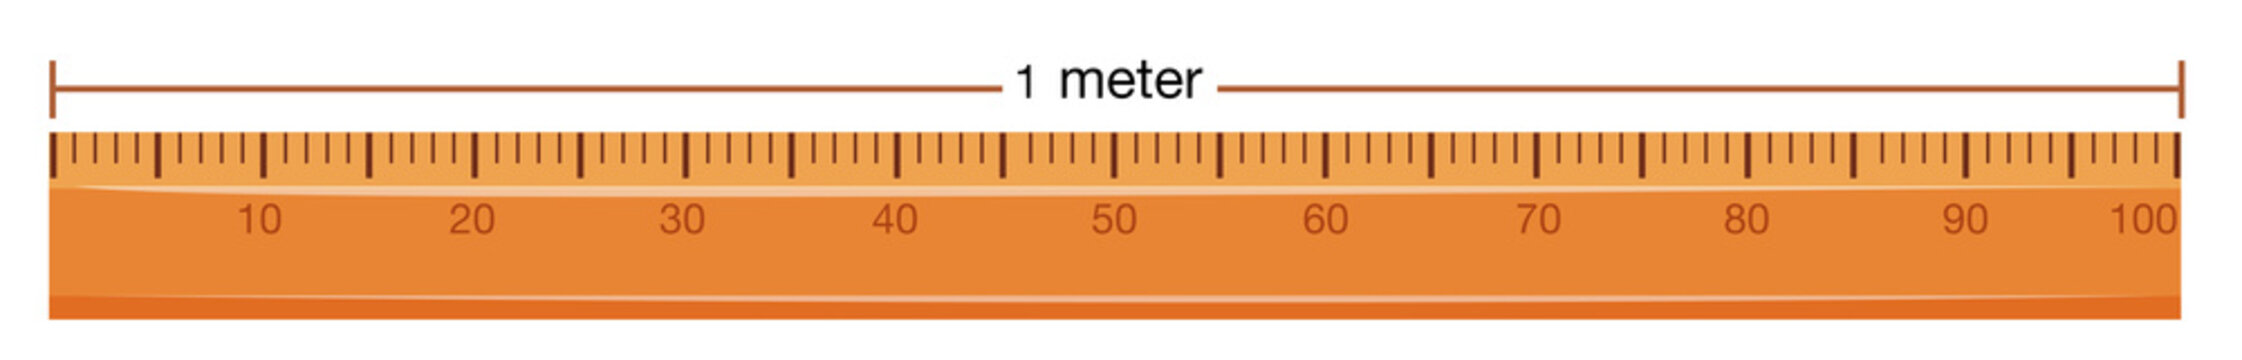 Wooden ruler with measurement in meter